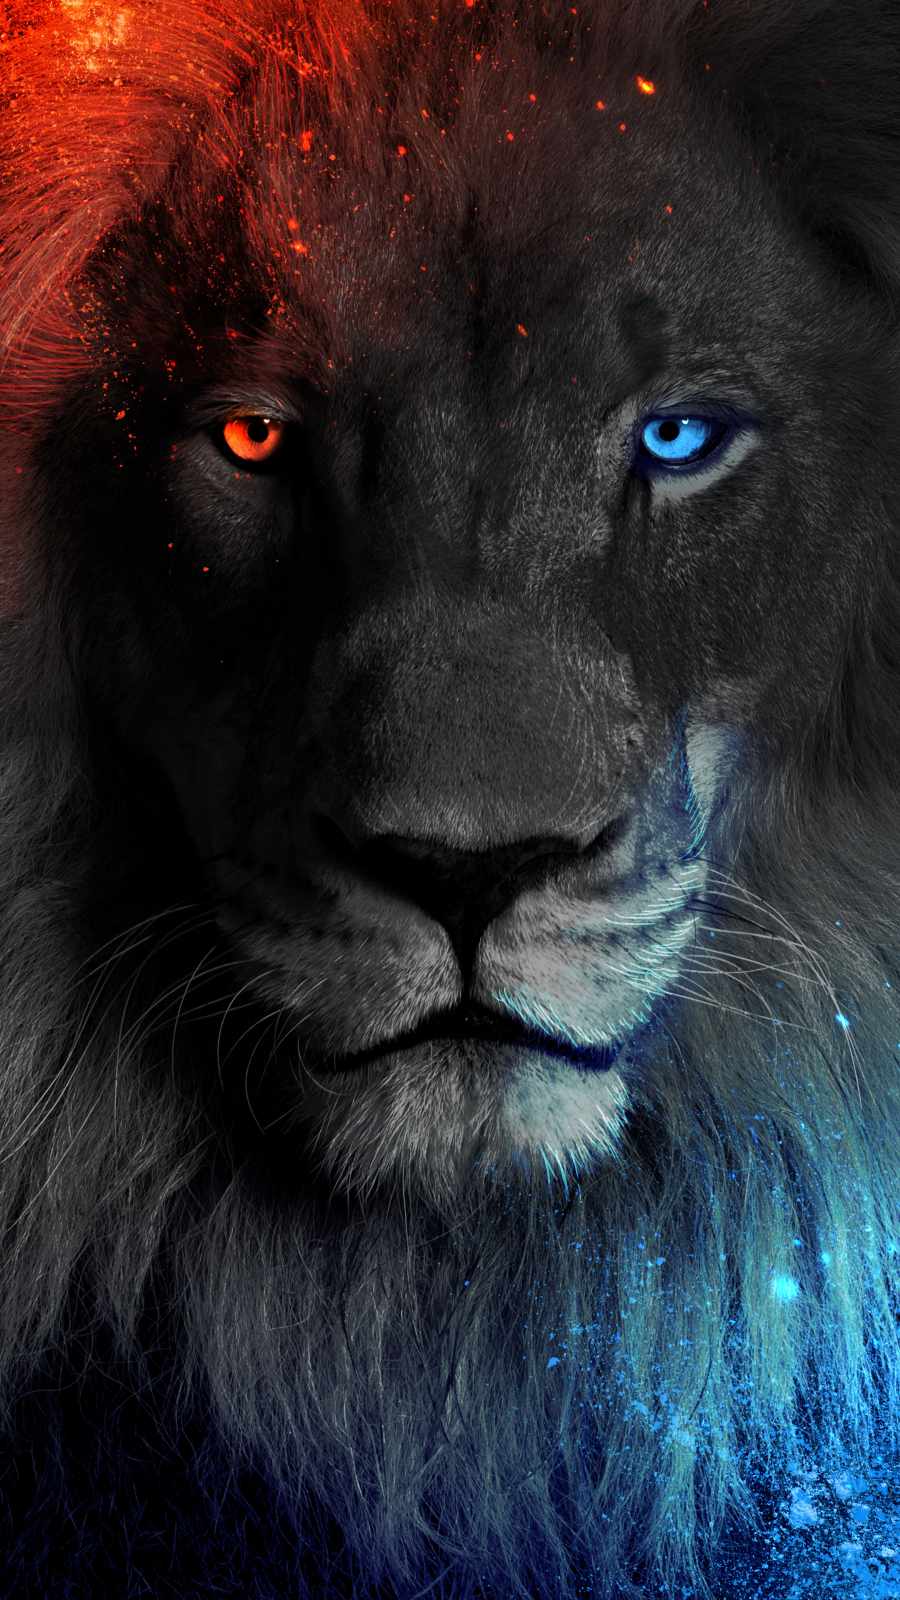 lion king 2 iphone wallpaper